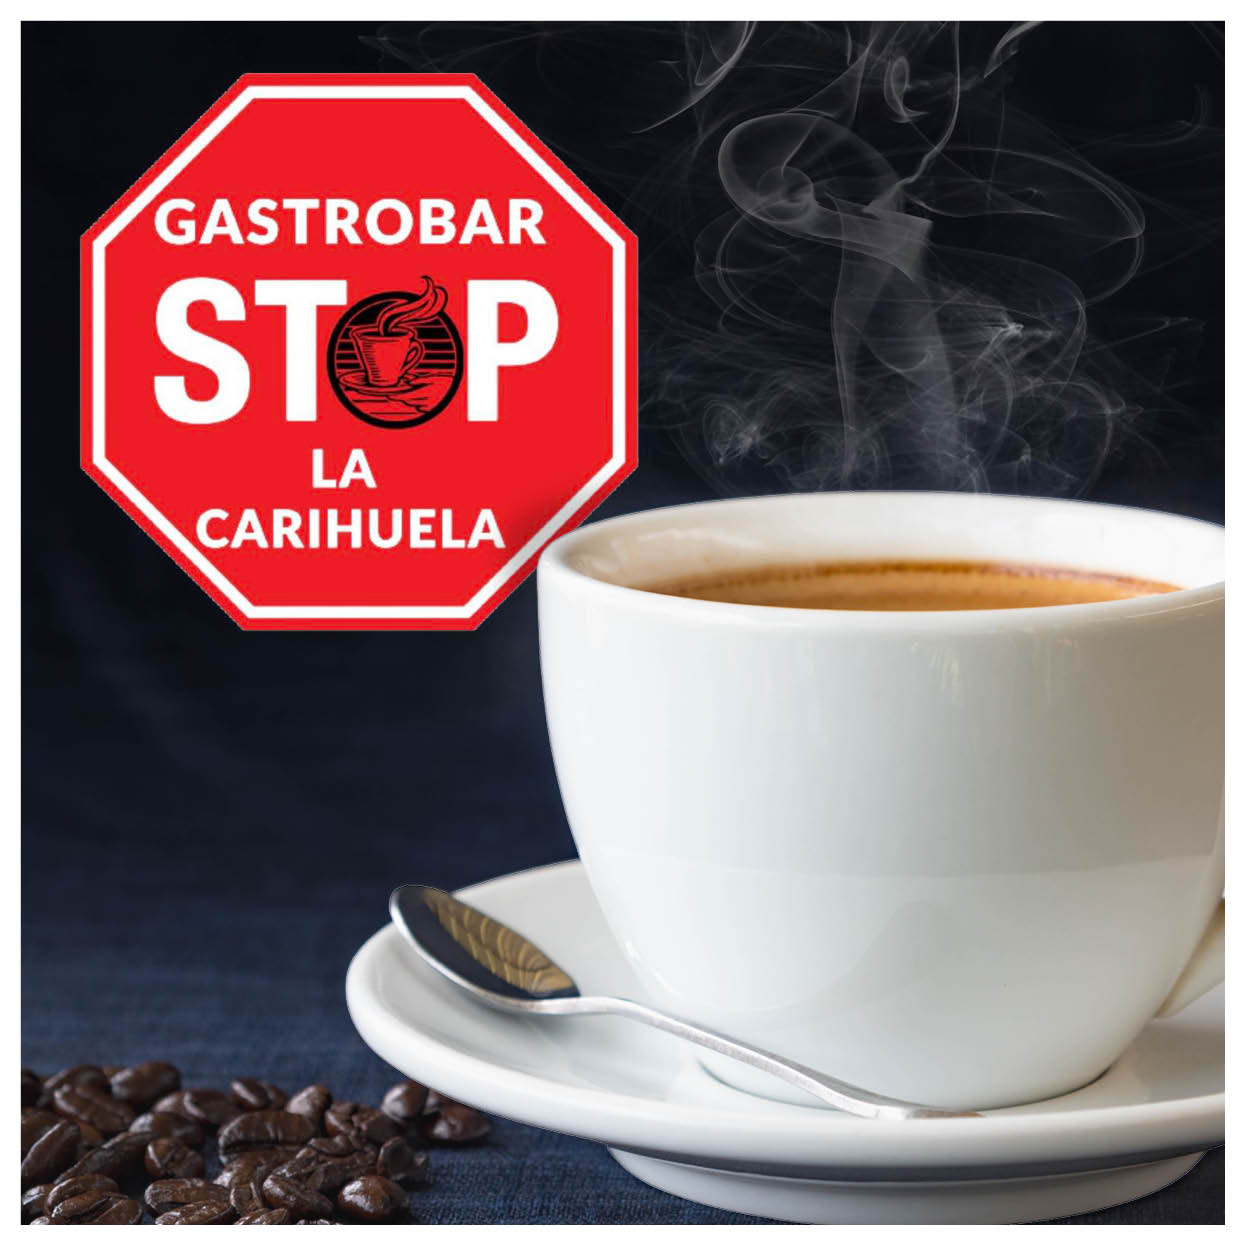 Gastrobar STOP La Carihuela